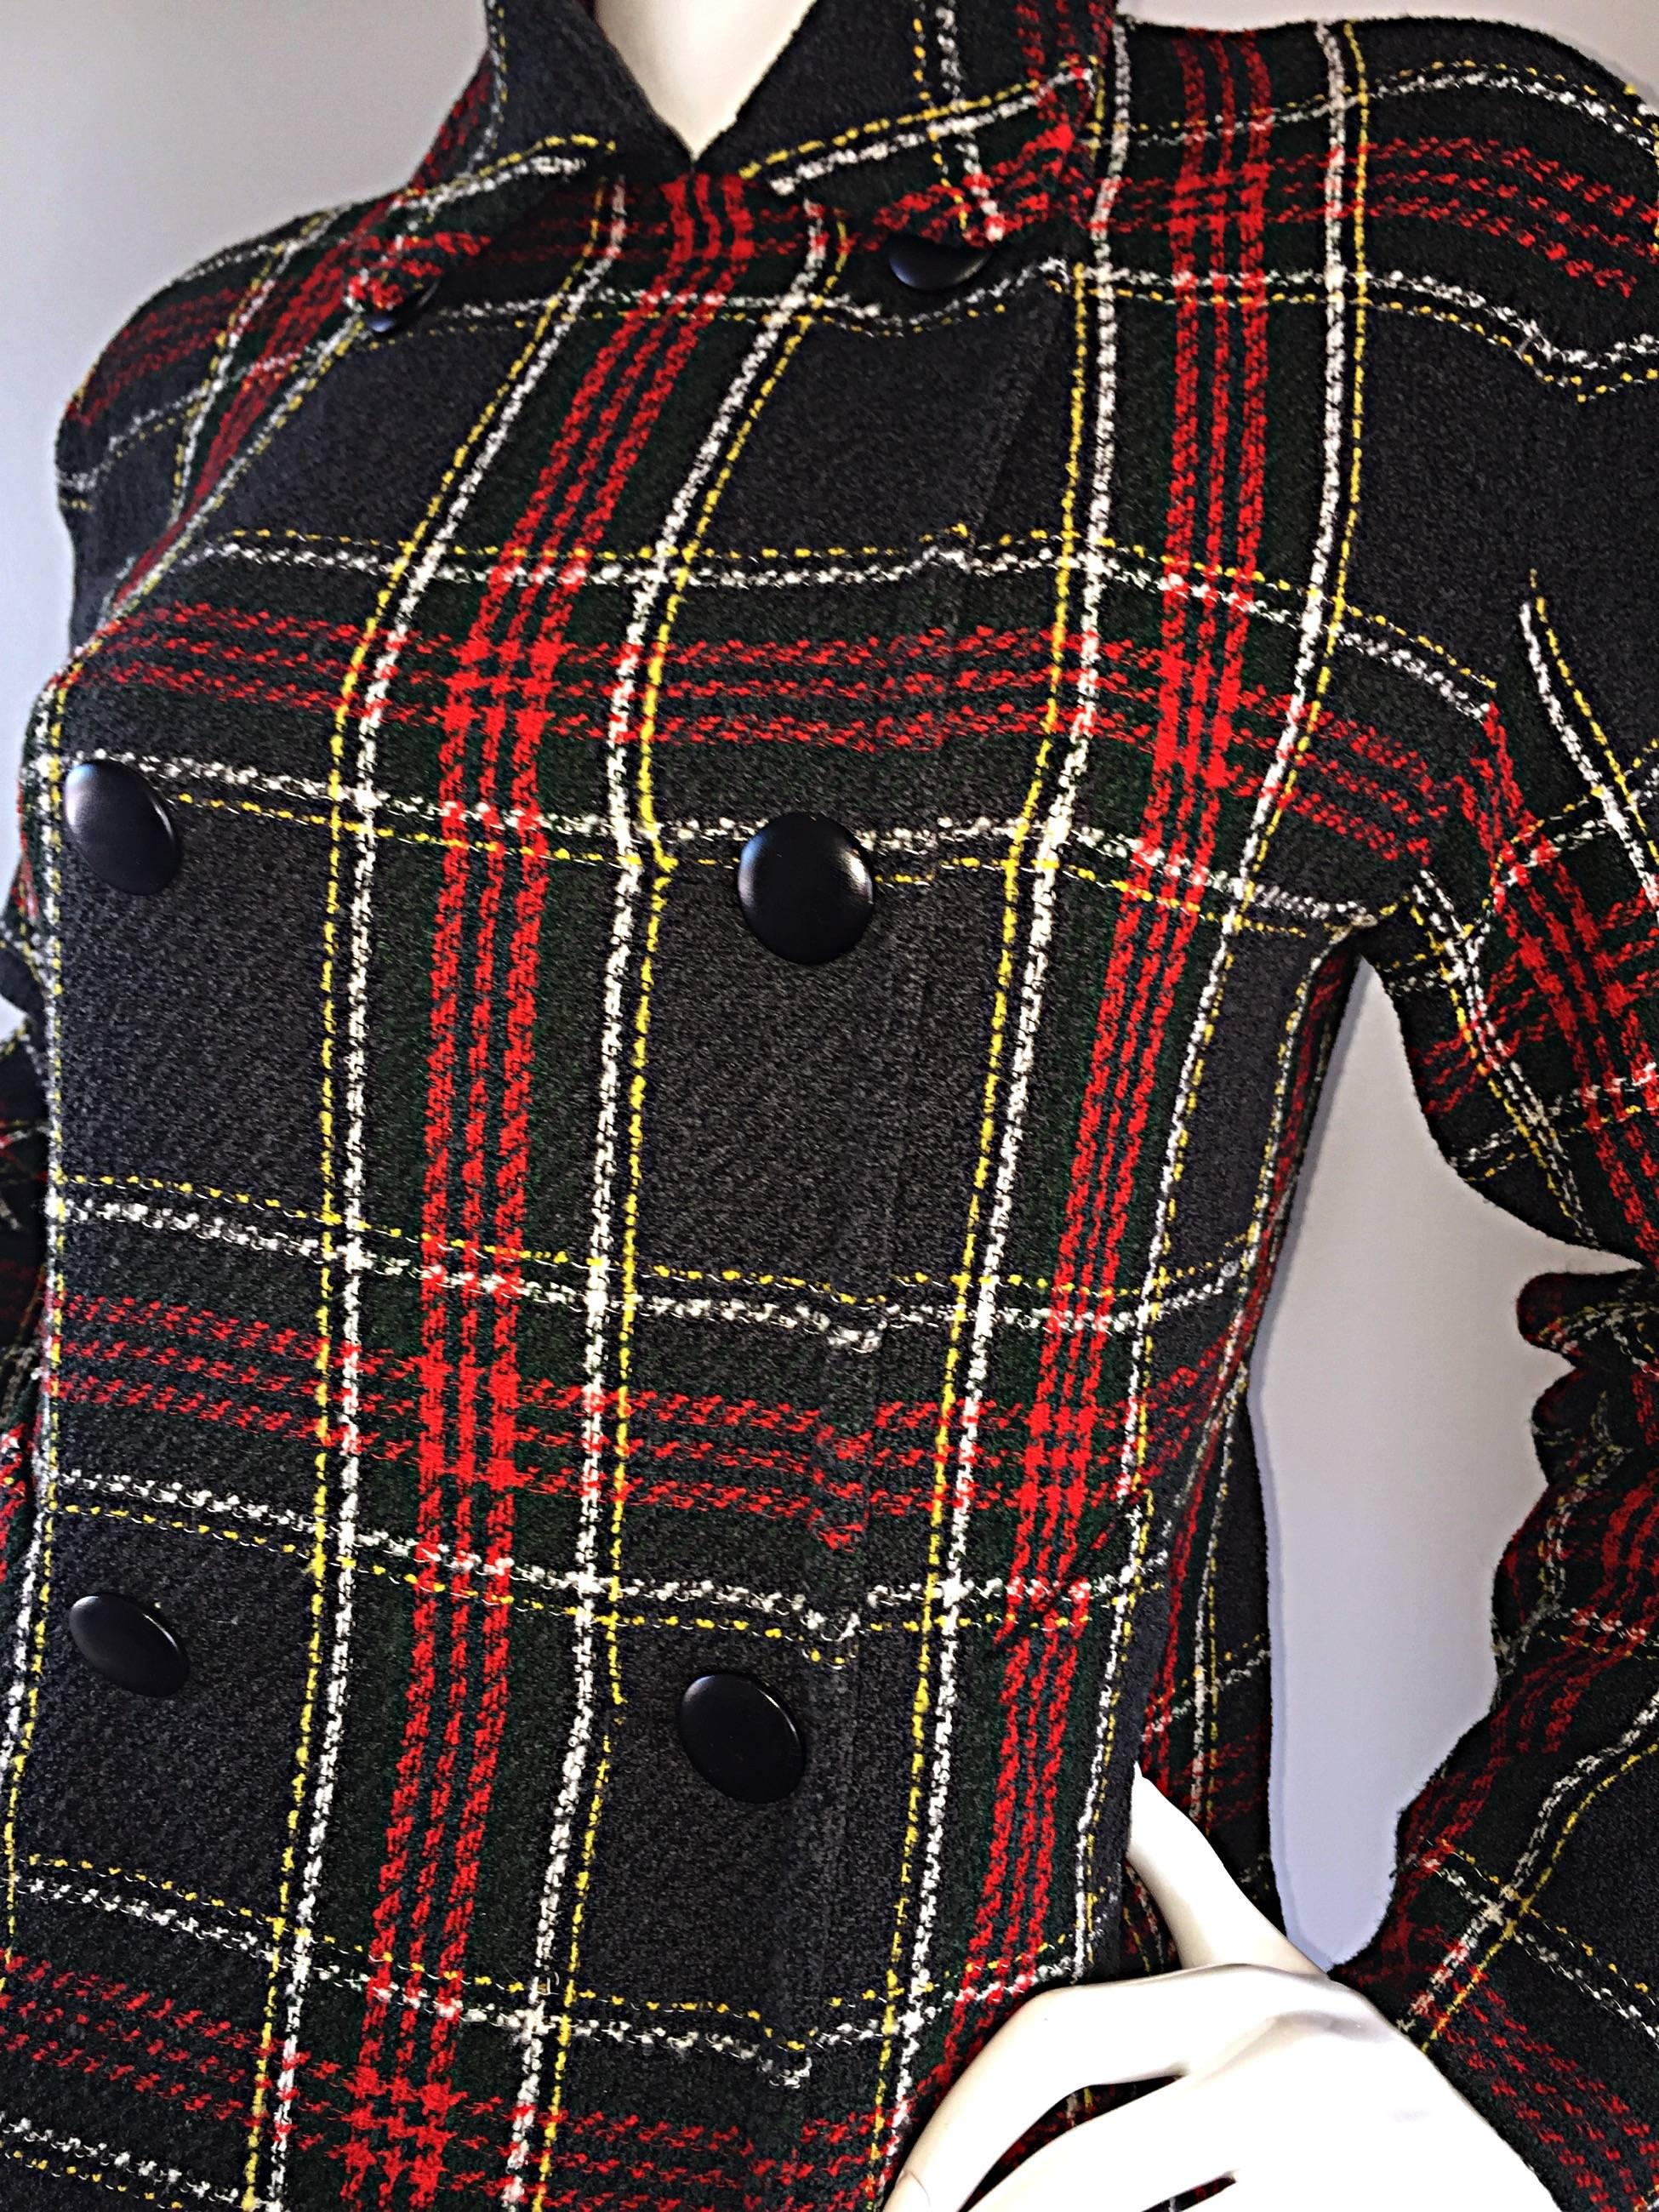 Women's Vintage Isaac Mizrahi for Bergdorf Goodman Tartan Plaid Wool Jacket / Coat